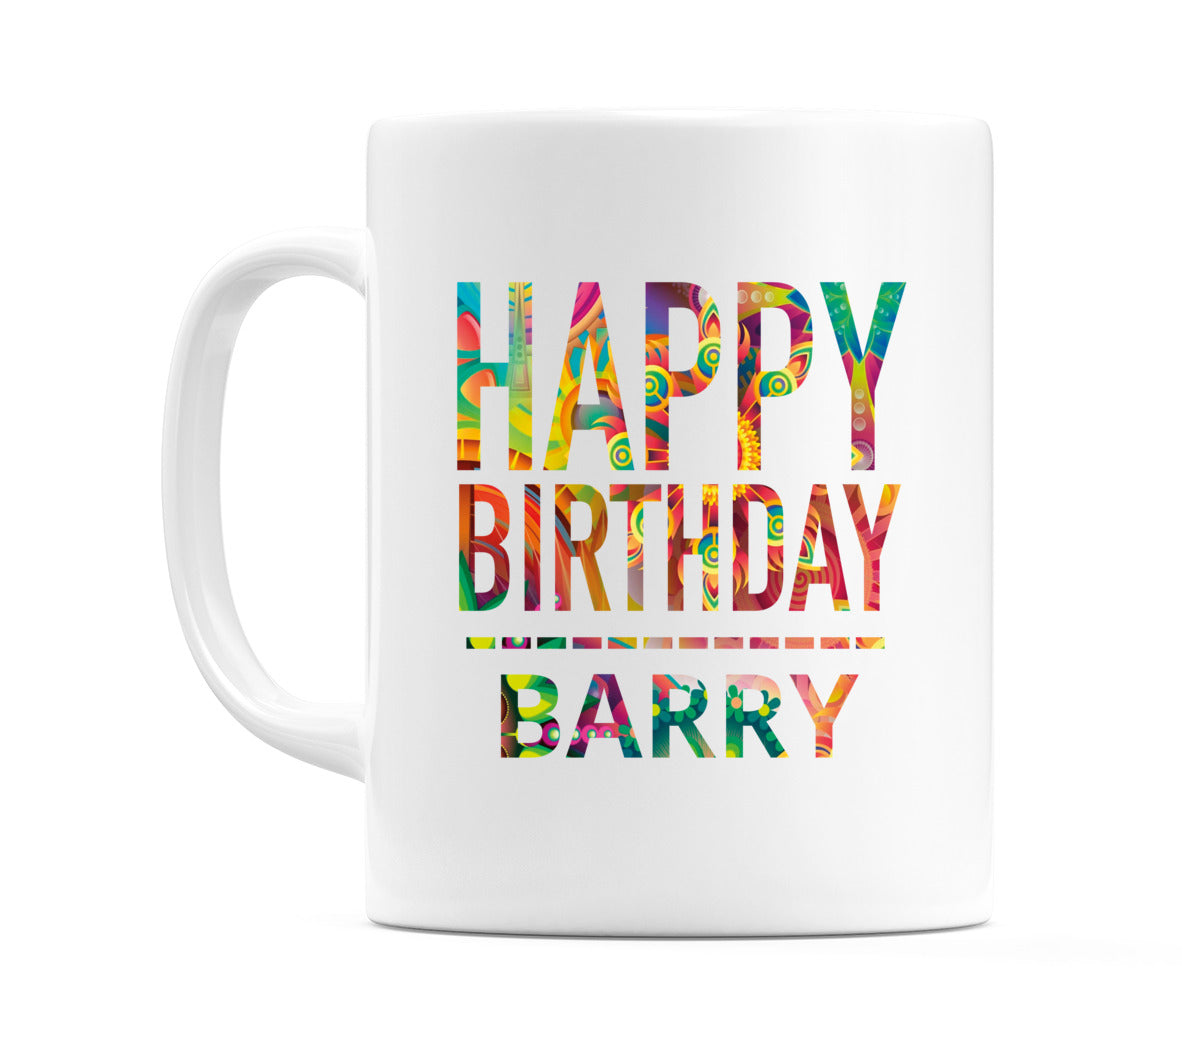 Happy Birthday Barry (Tie Dye Effect) Mug Cup by WeDoMugs